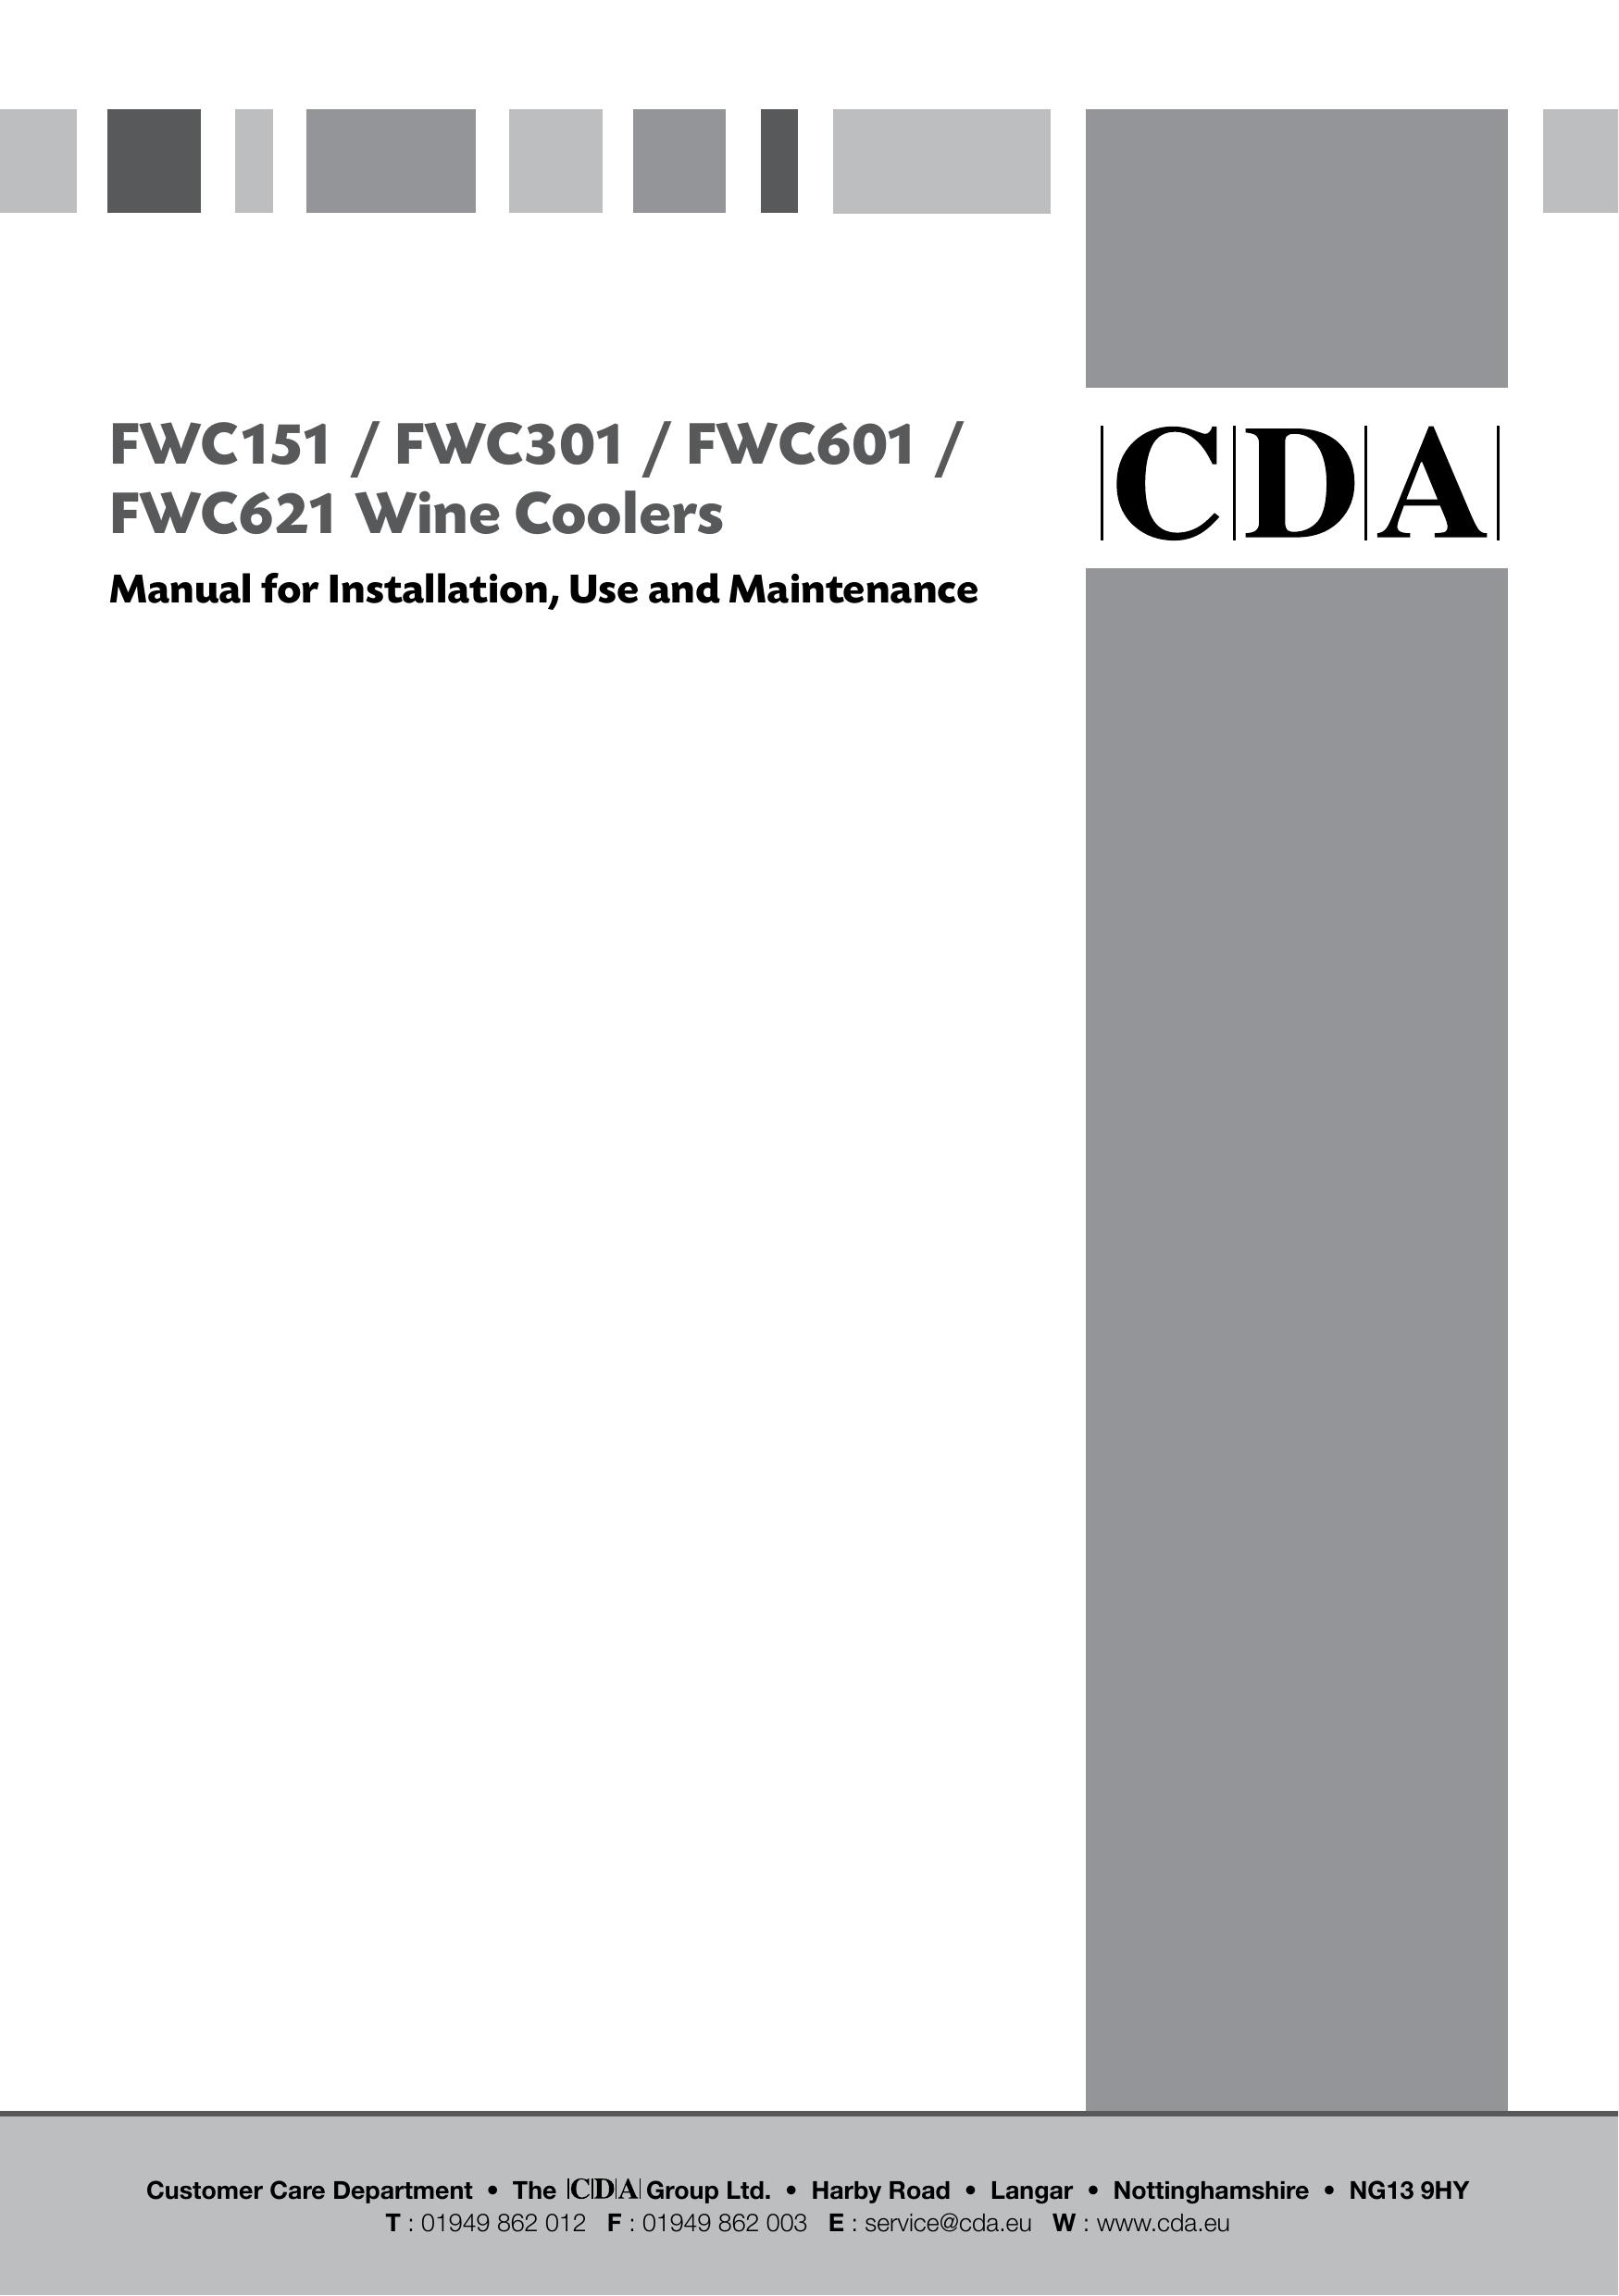 CDA FWC301 Refrigerator User Manual